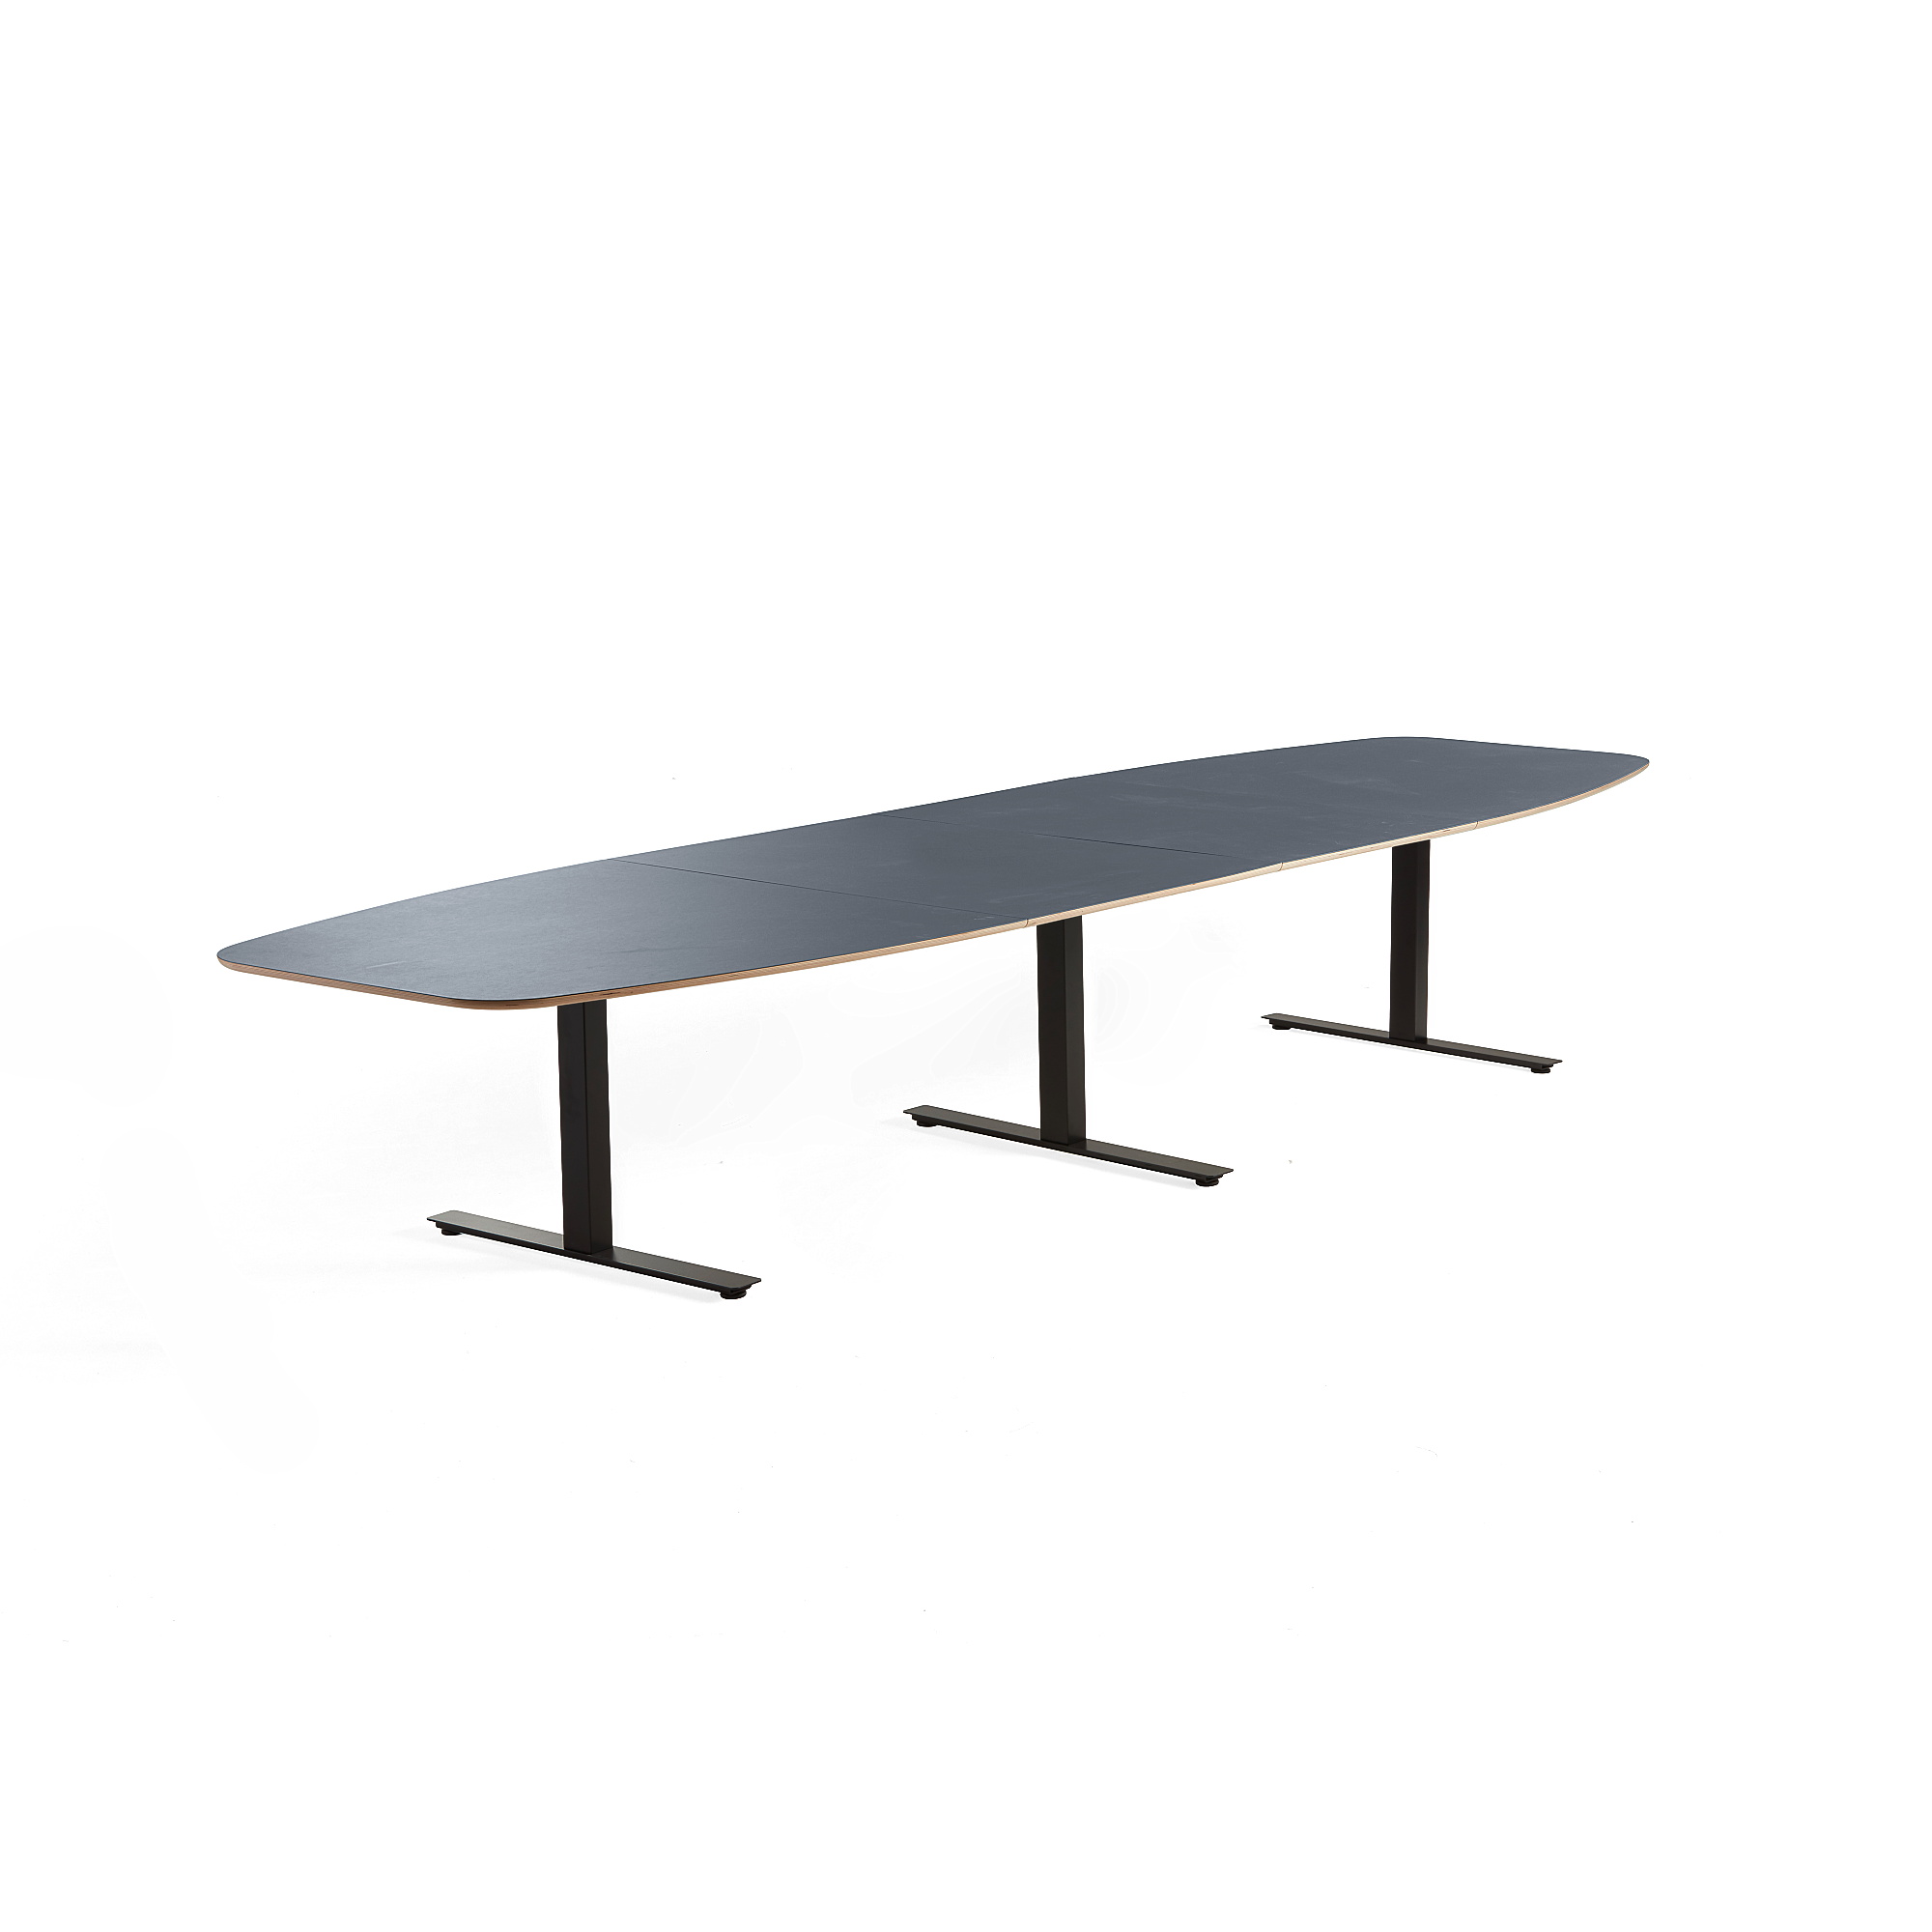 Rokovací stôl AUDREY, 4000x1200 mm, čierny rám, pastelová modrá doska